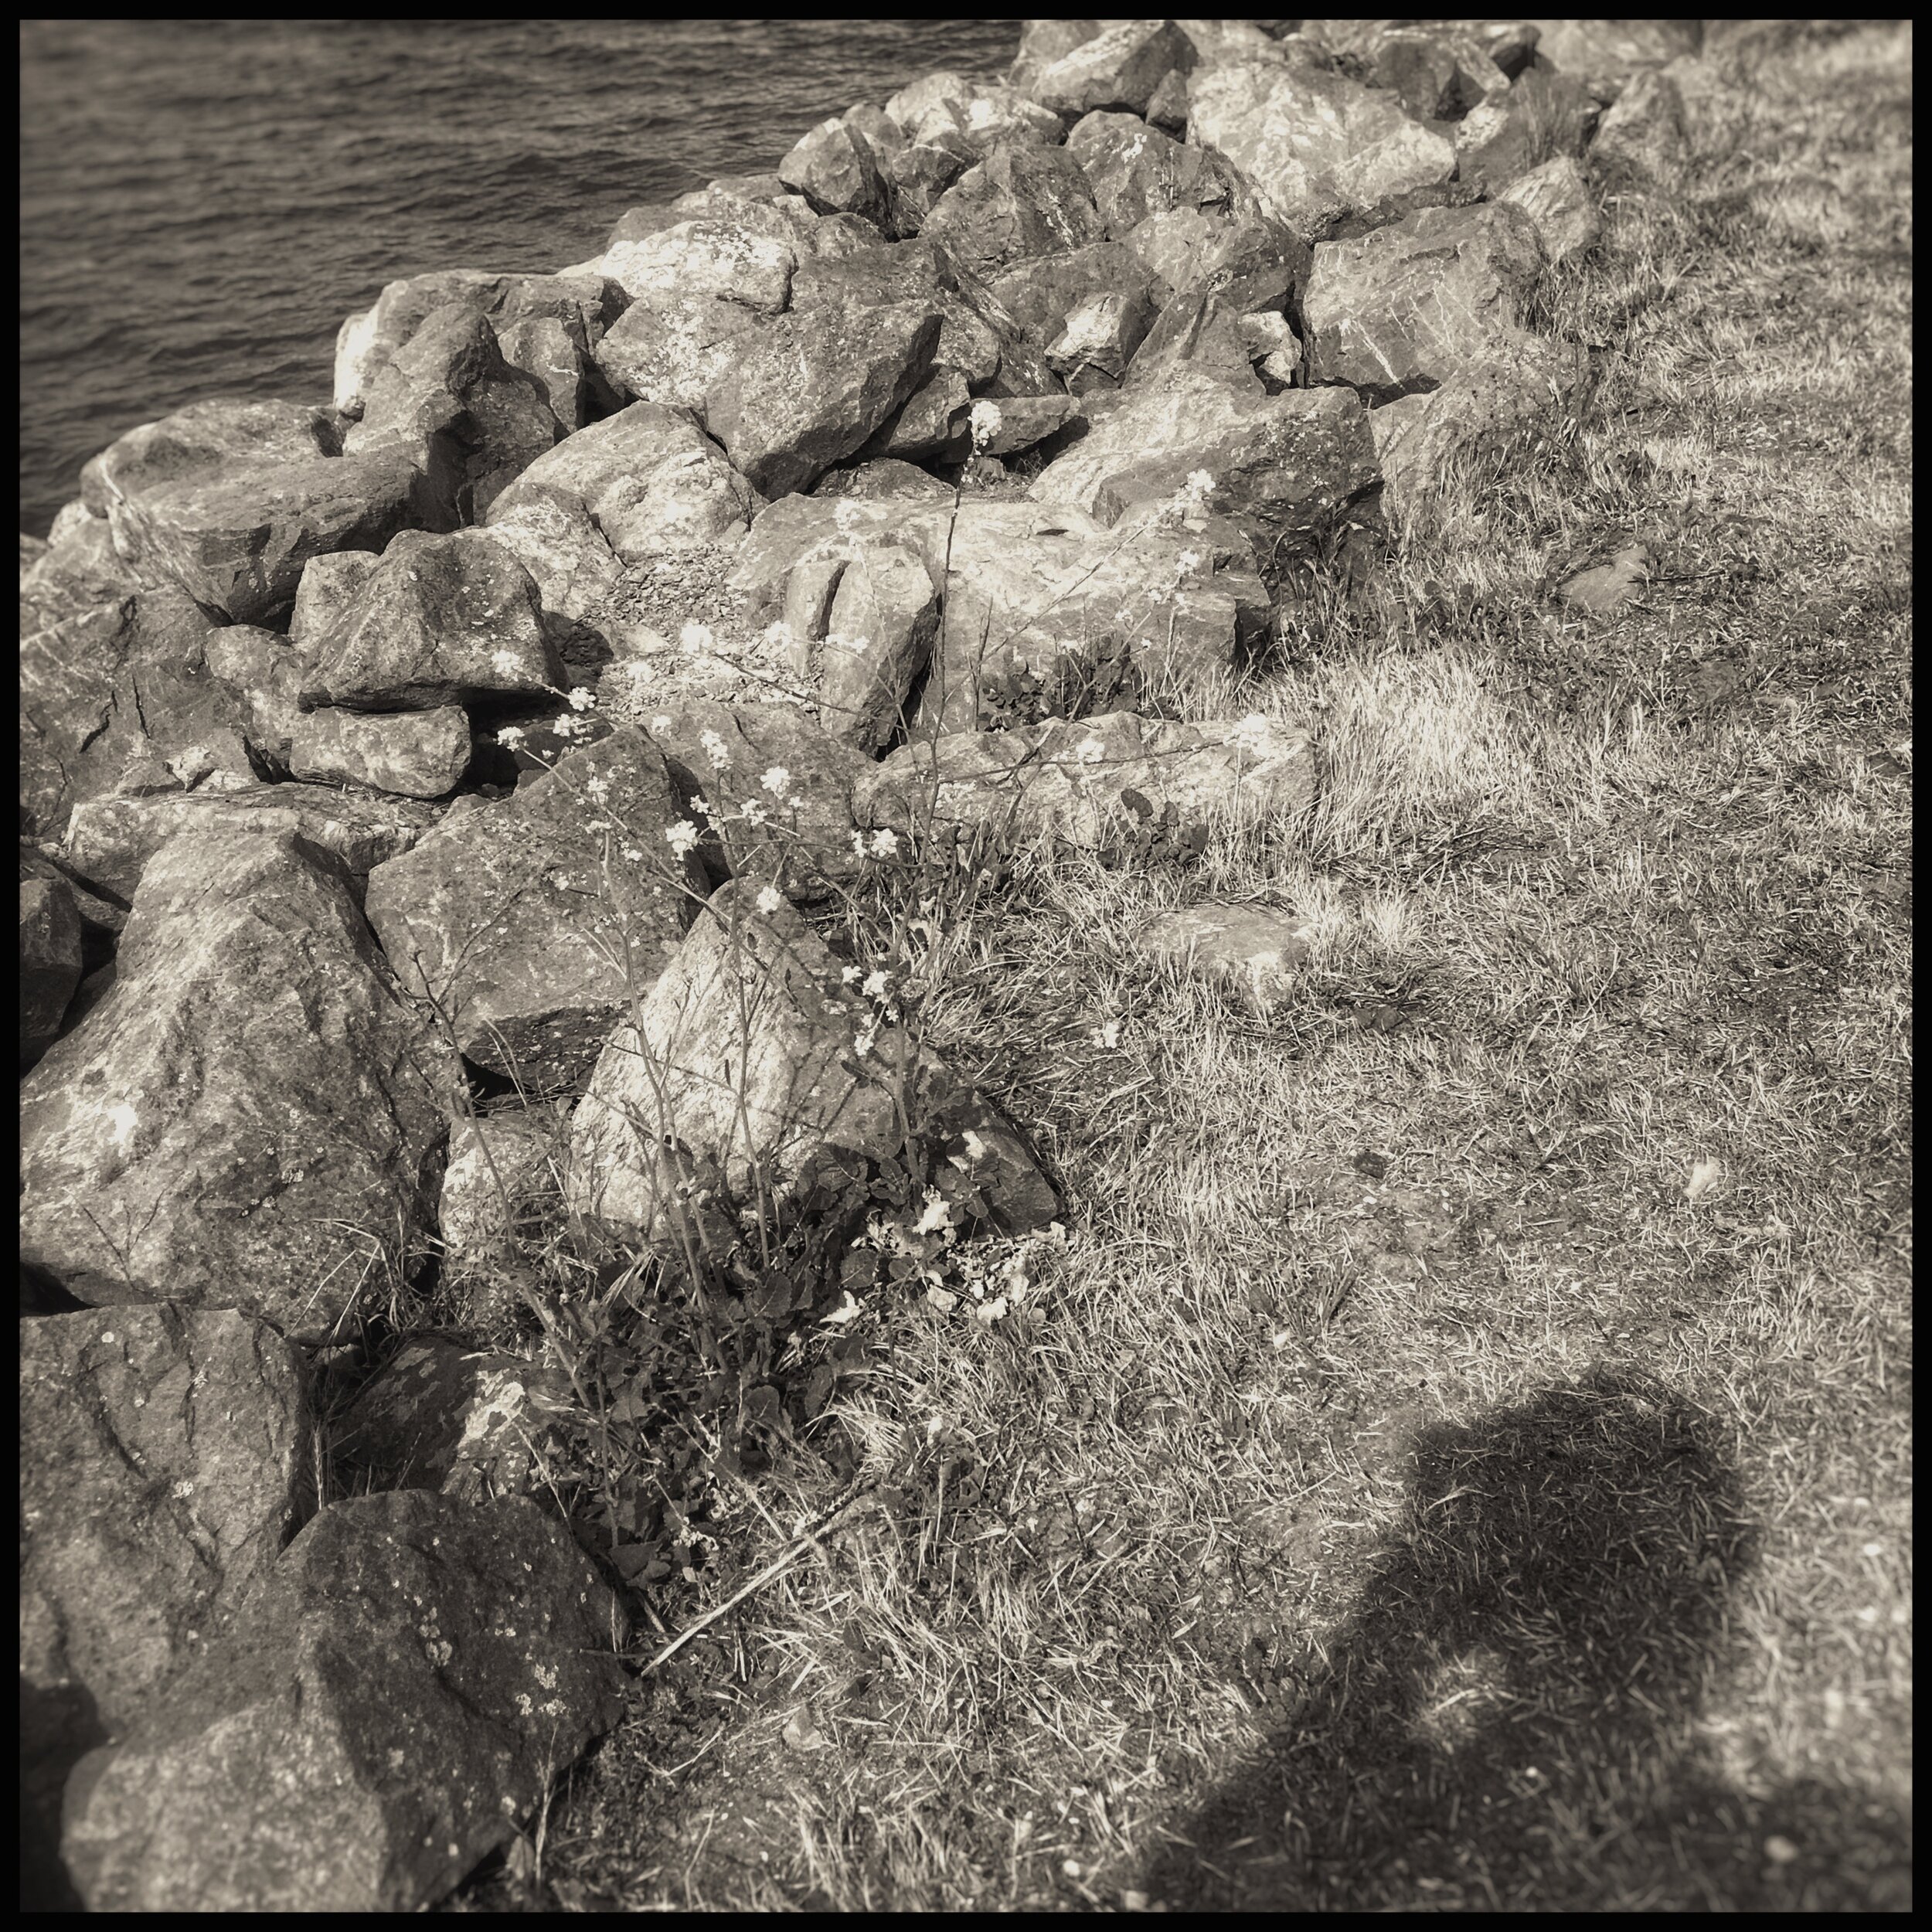 self shadow grasses gravel.JPEG